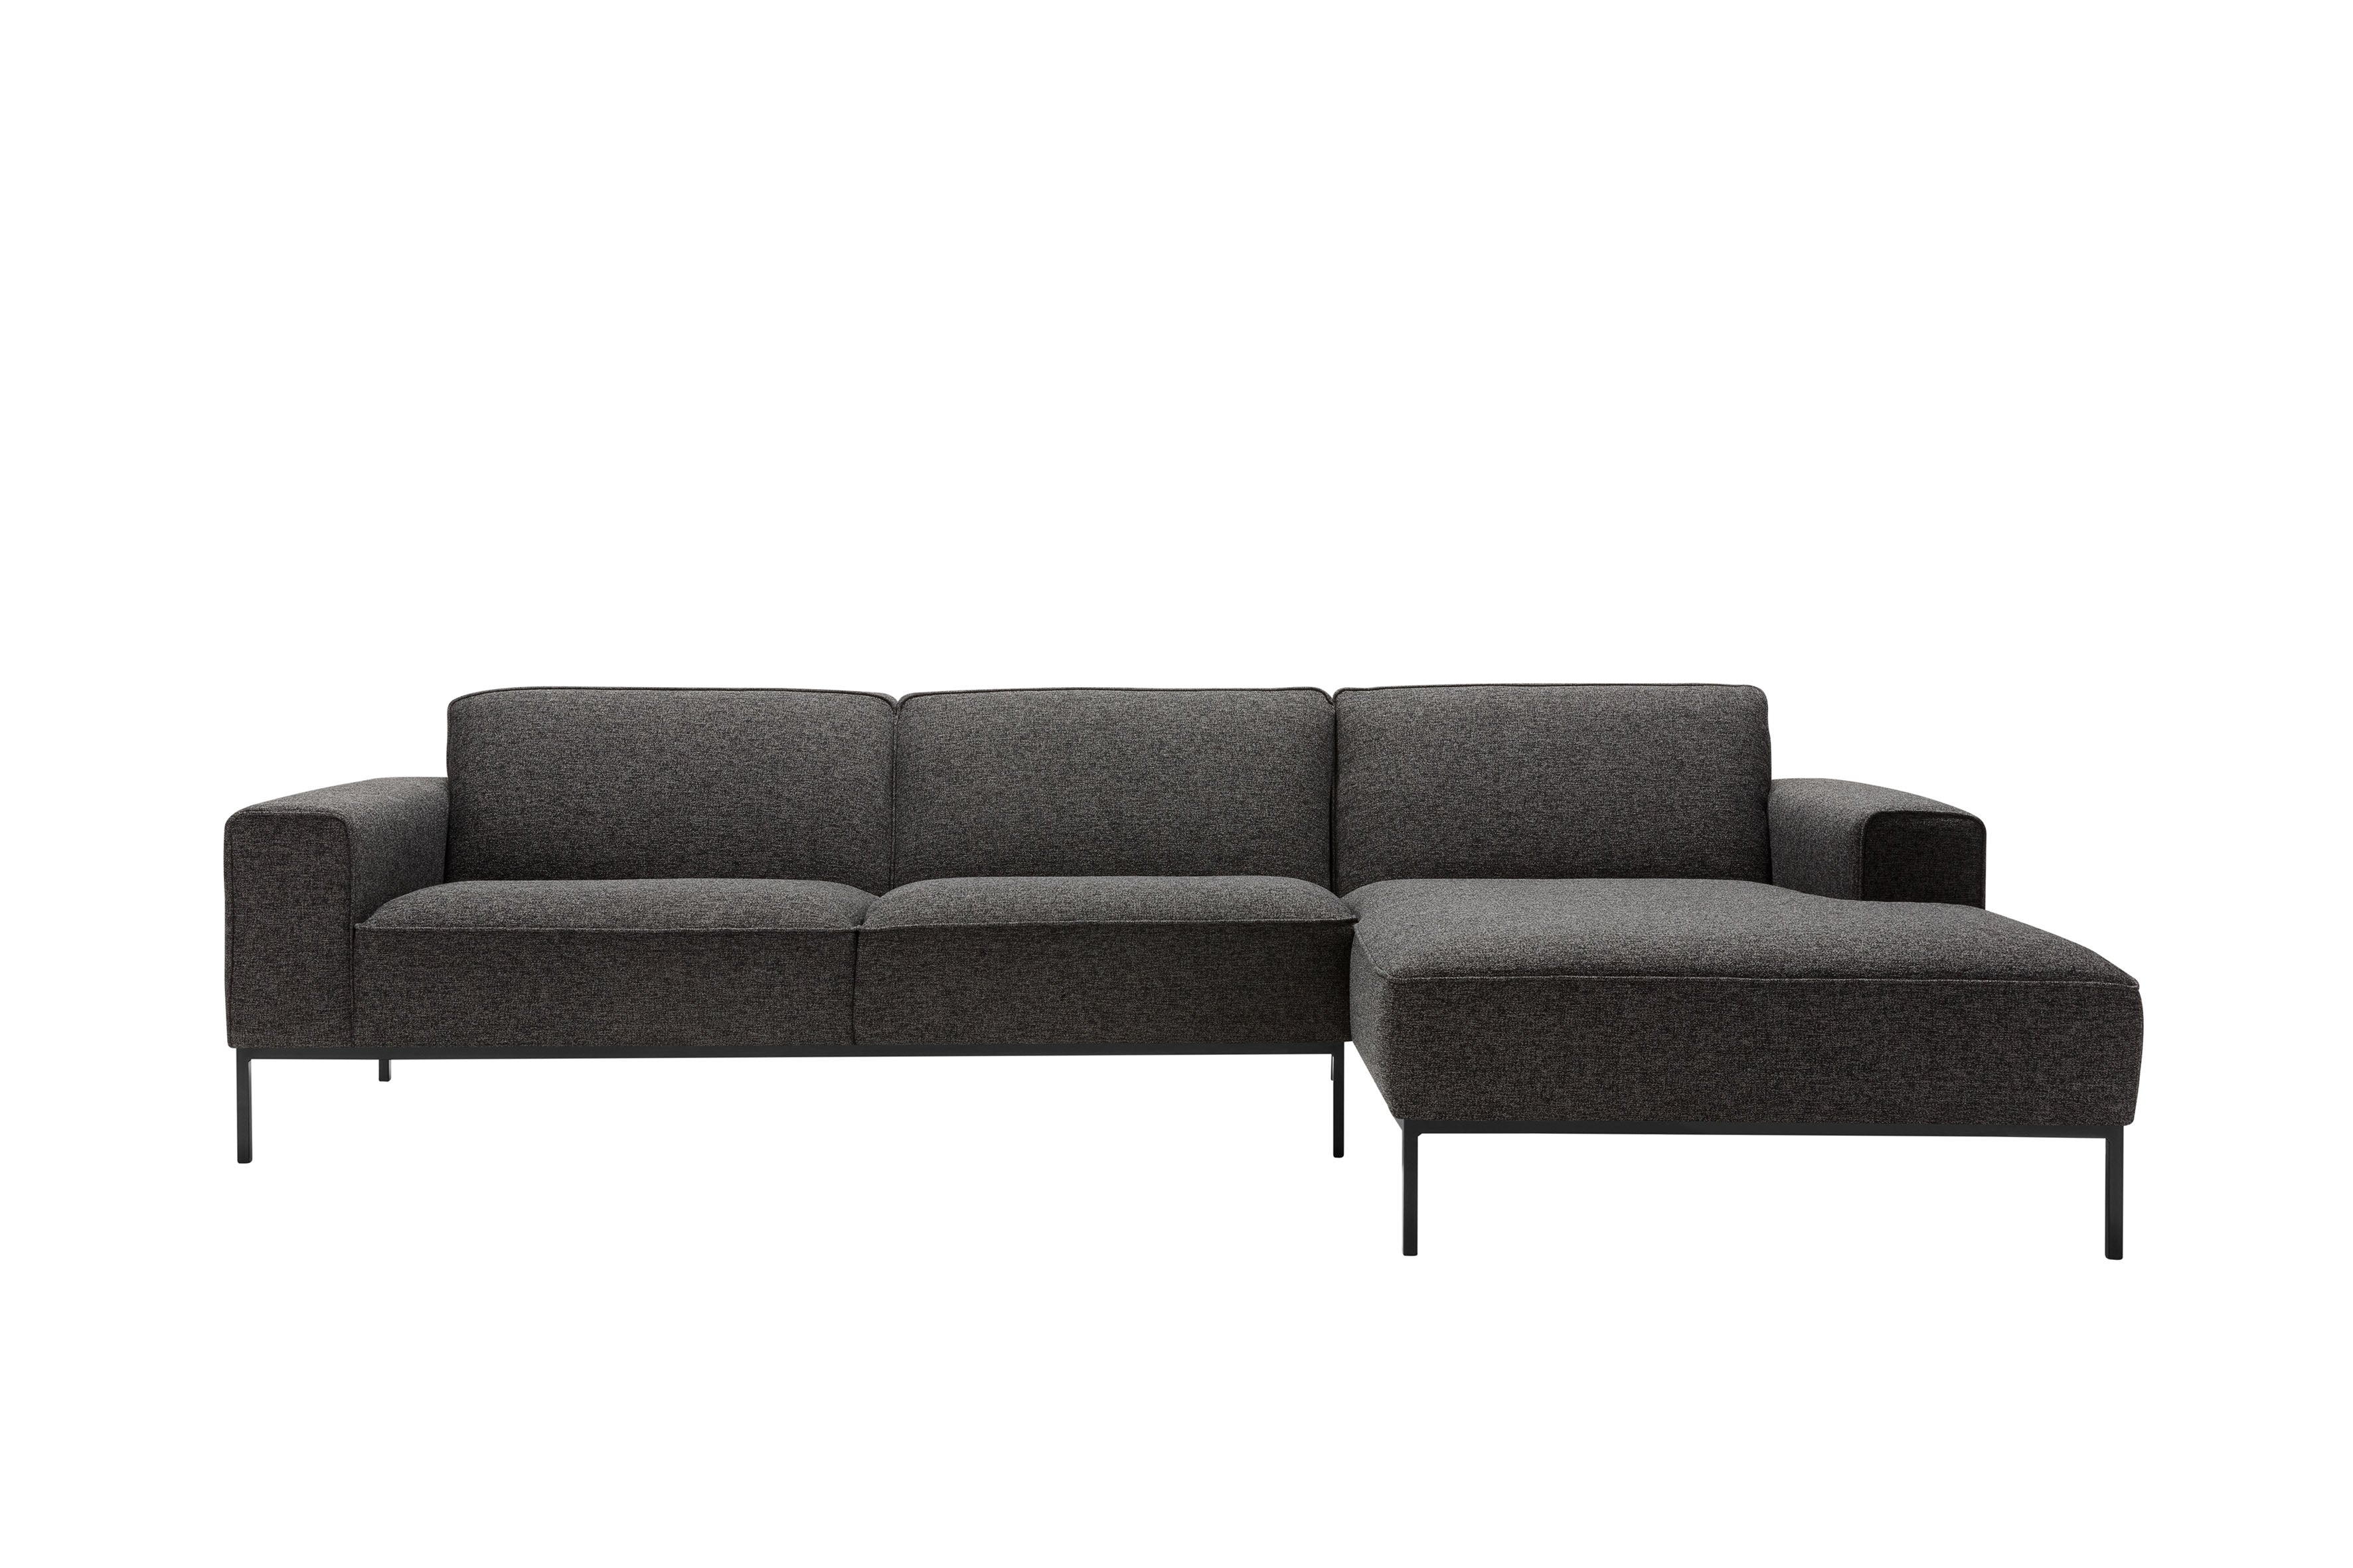 Mastrella Vezia Set 1 Corner Sofa Right